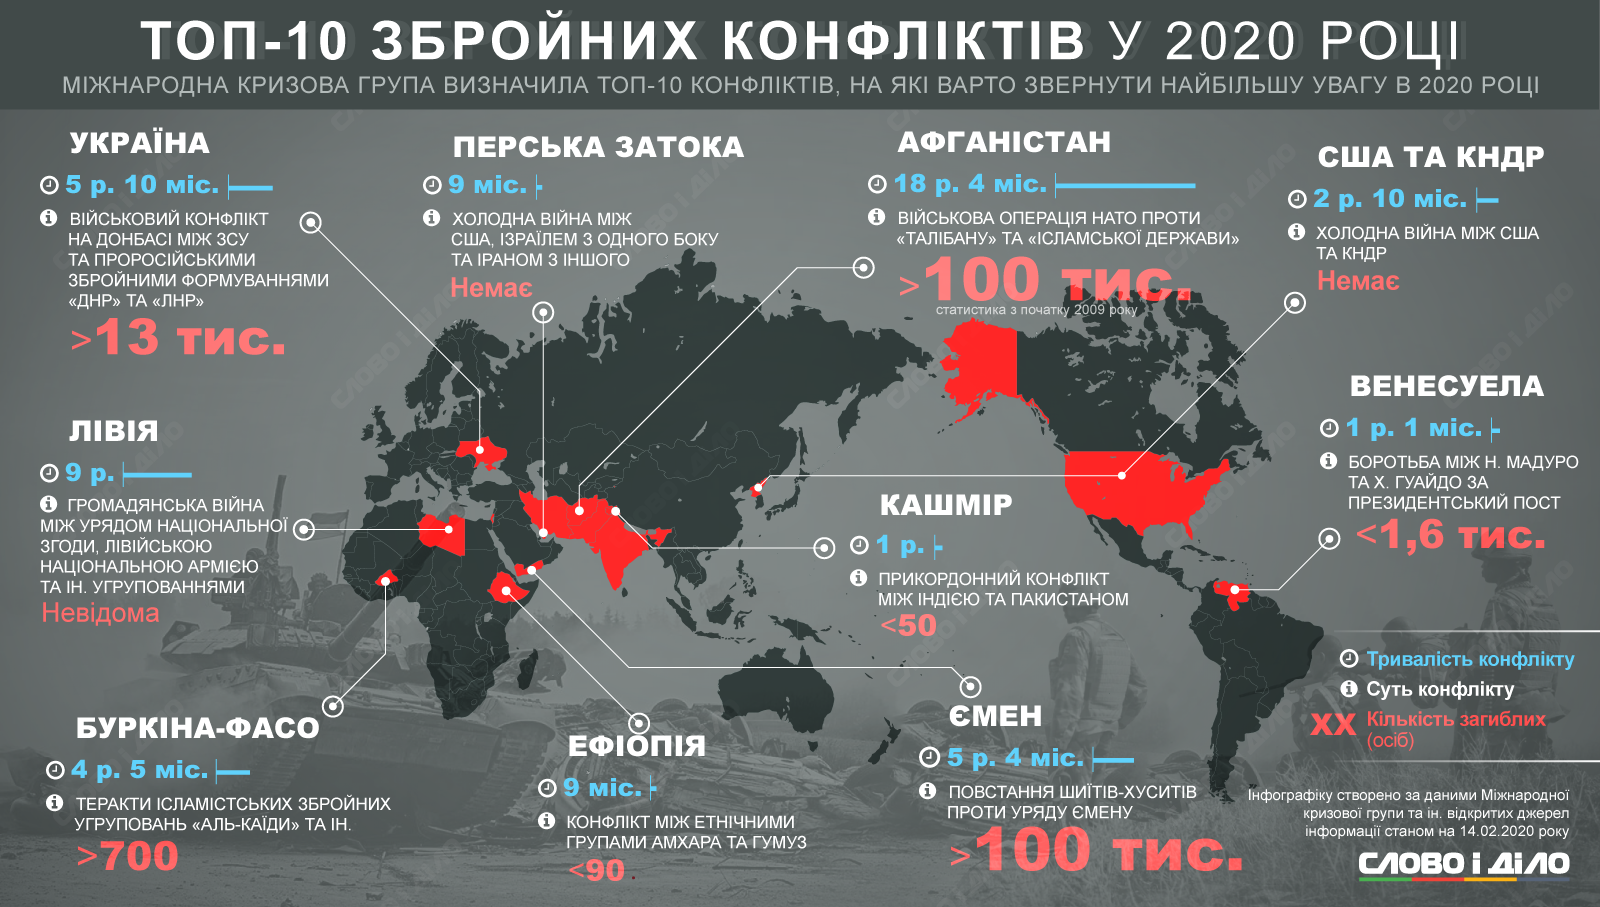 http://media.slovoidilo.ua/media/infographics/11/104507/104507-1_uk_origin.png